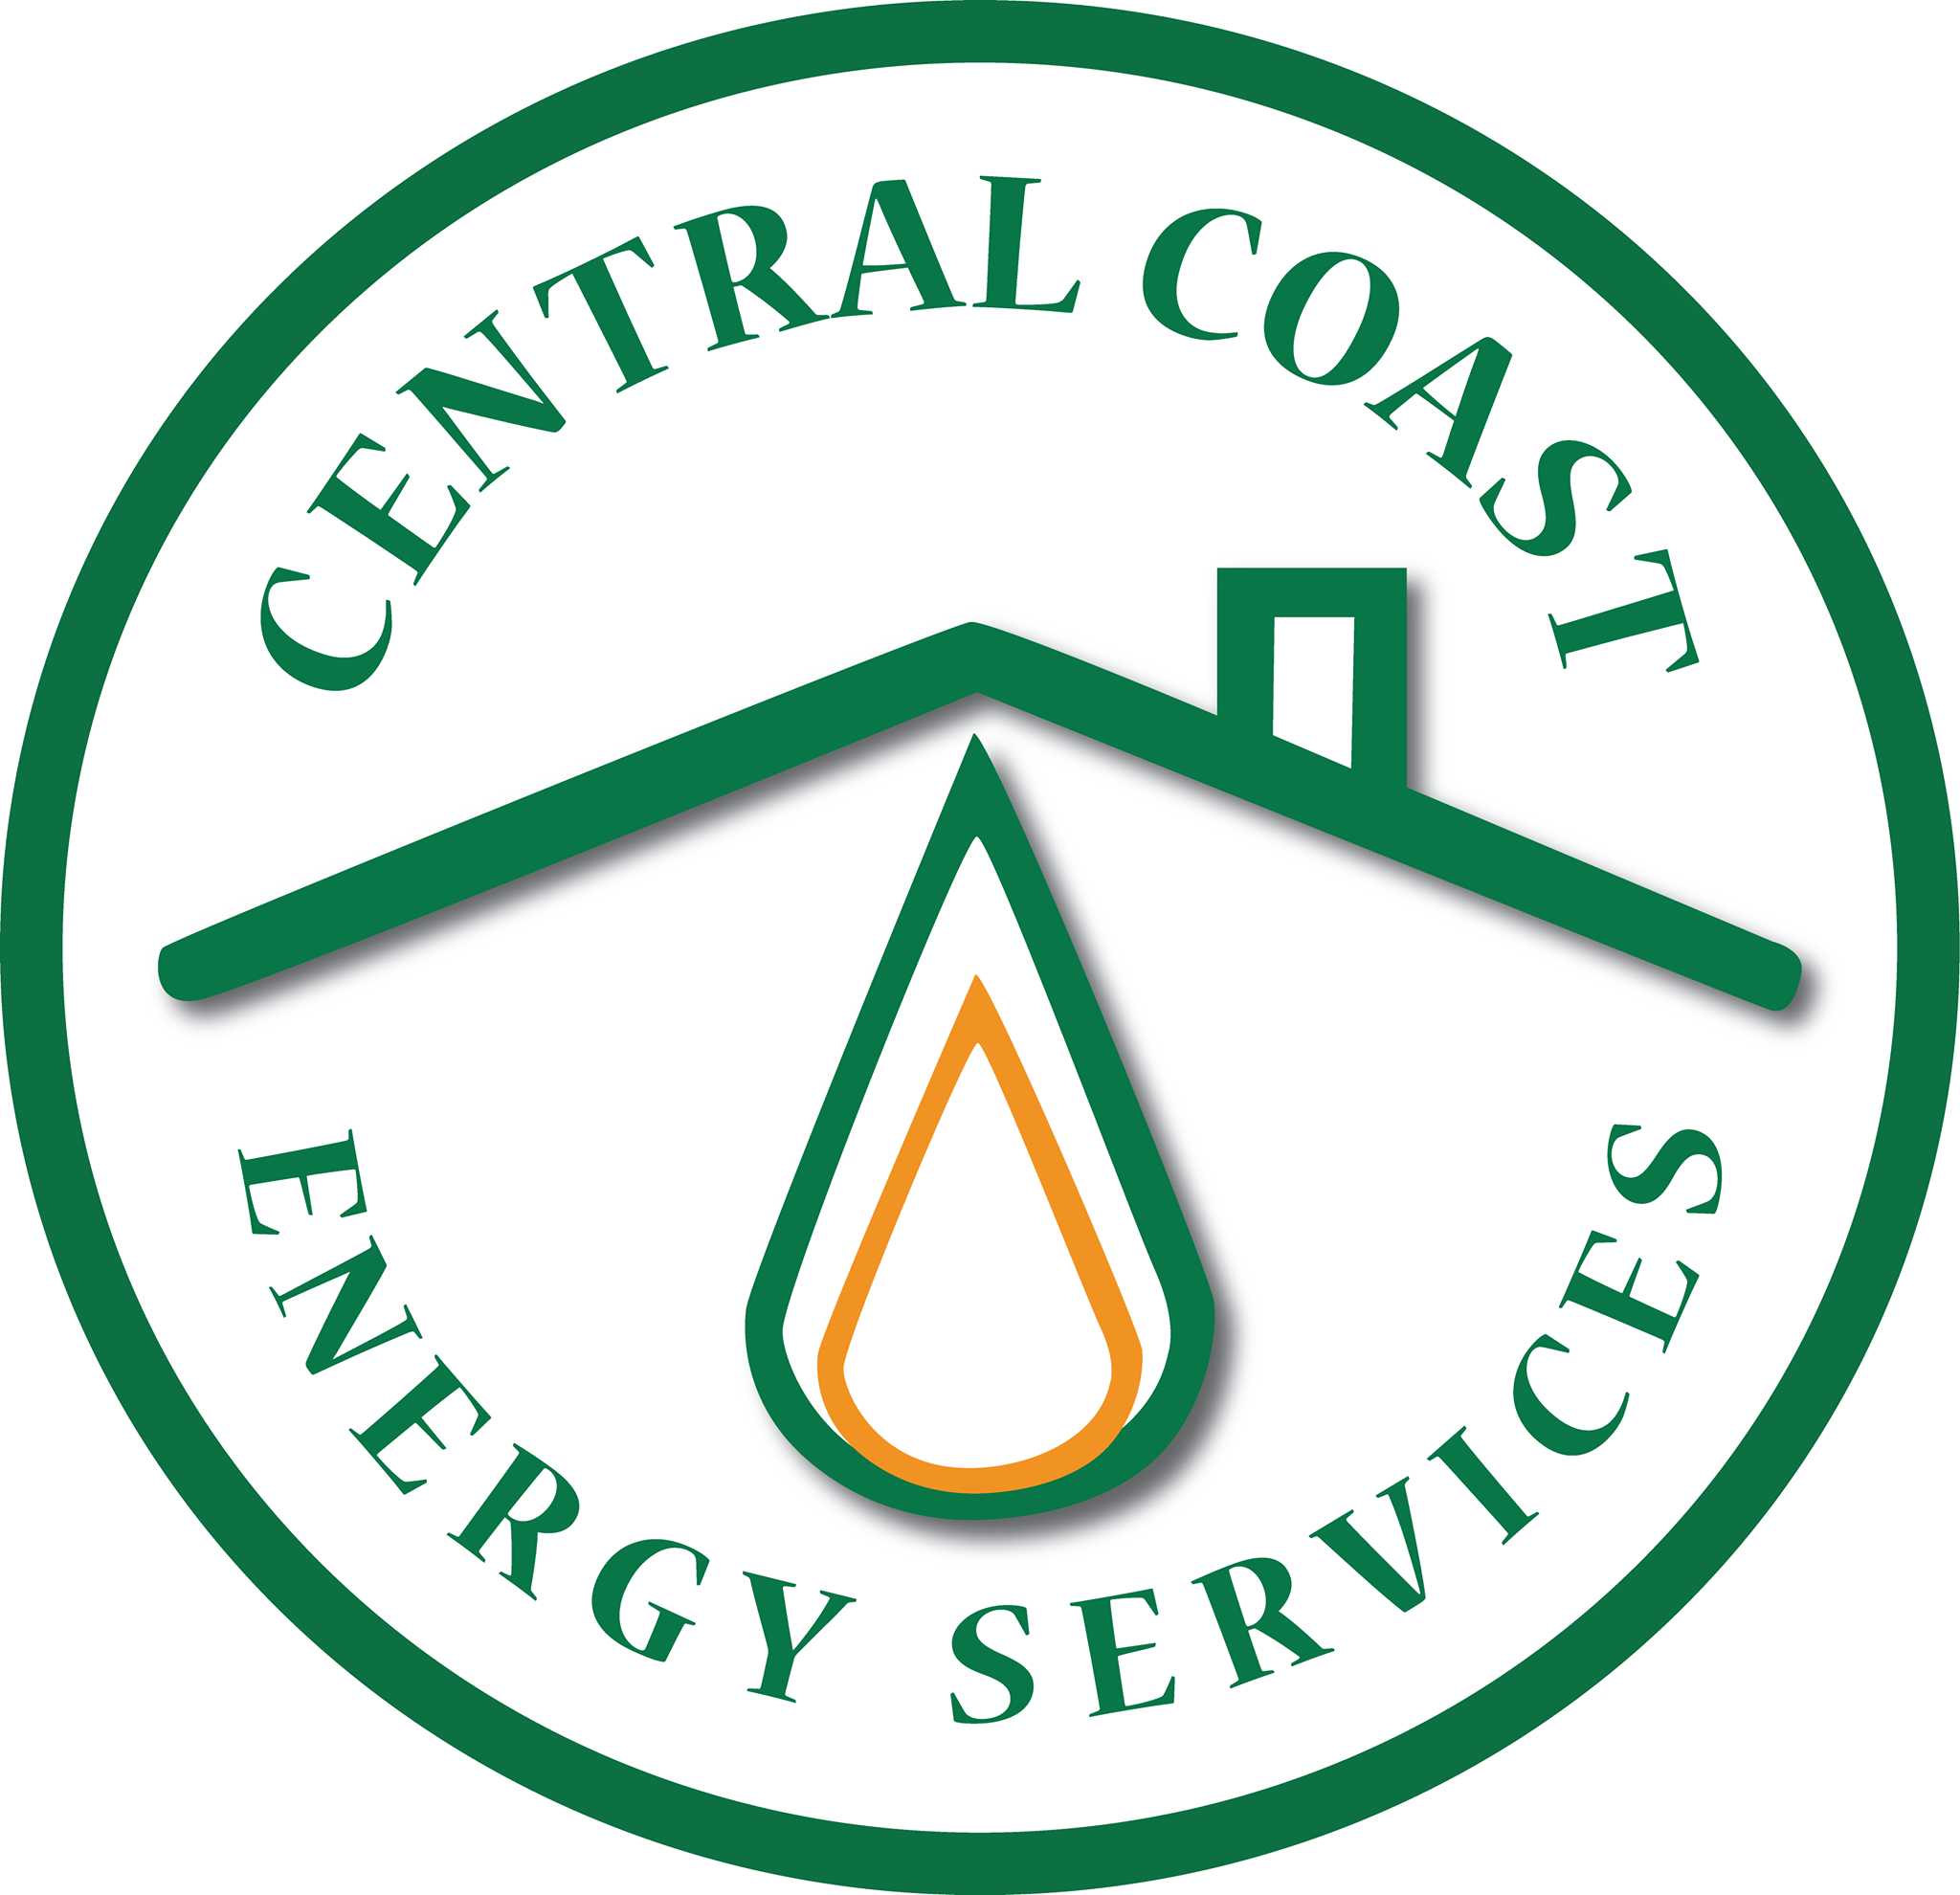 Central Coast Energy Services Inc